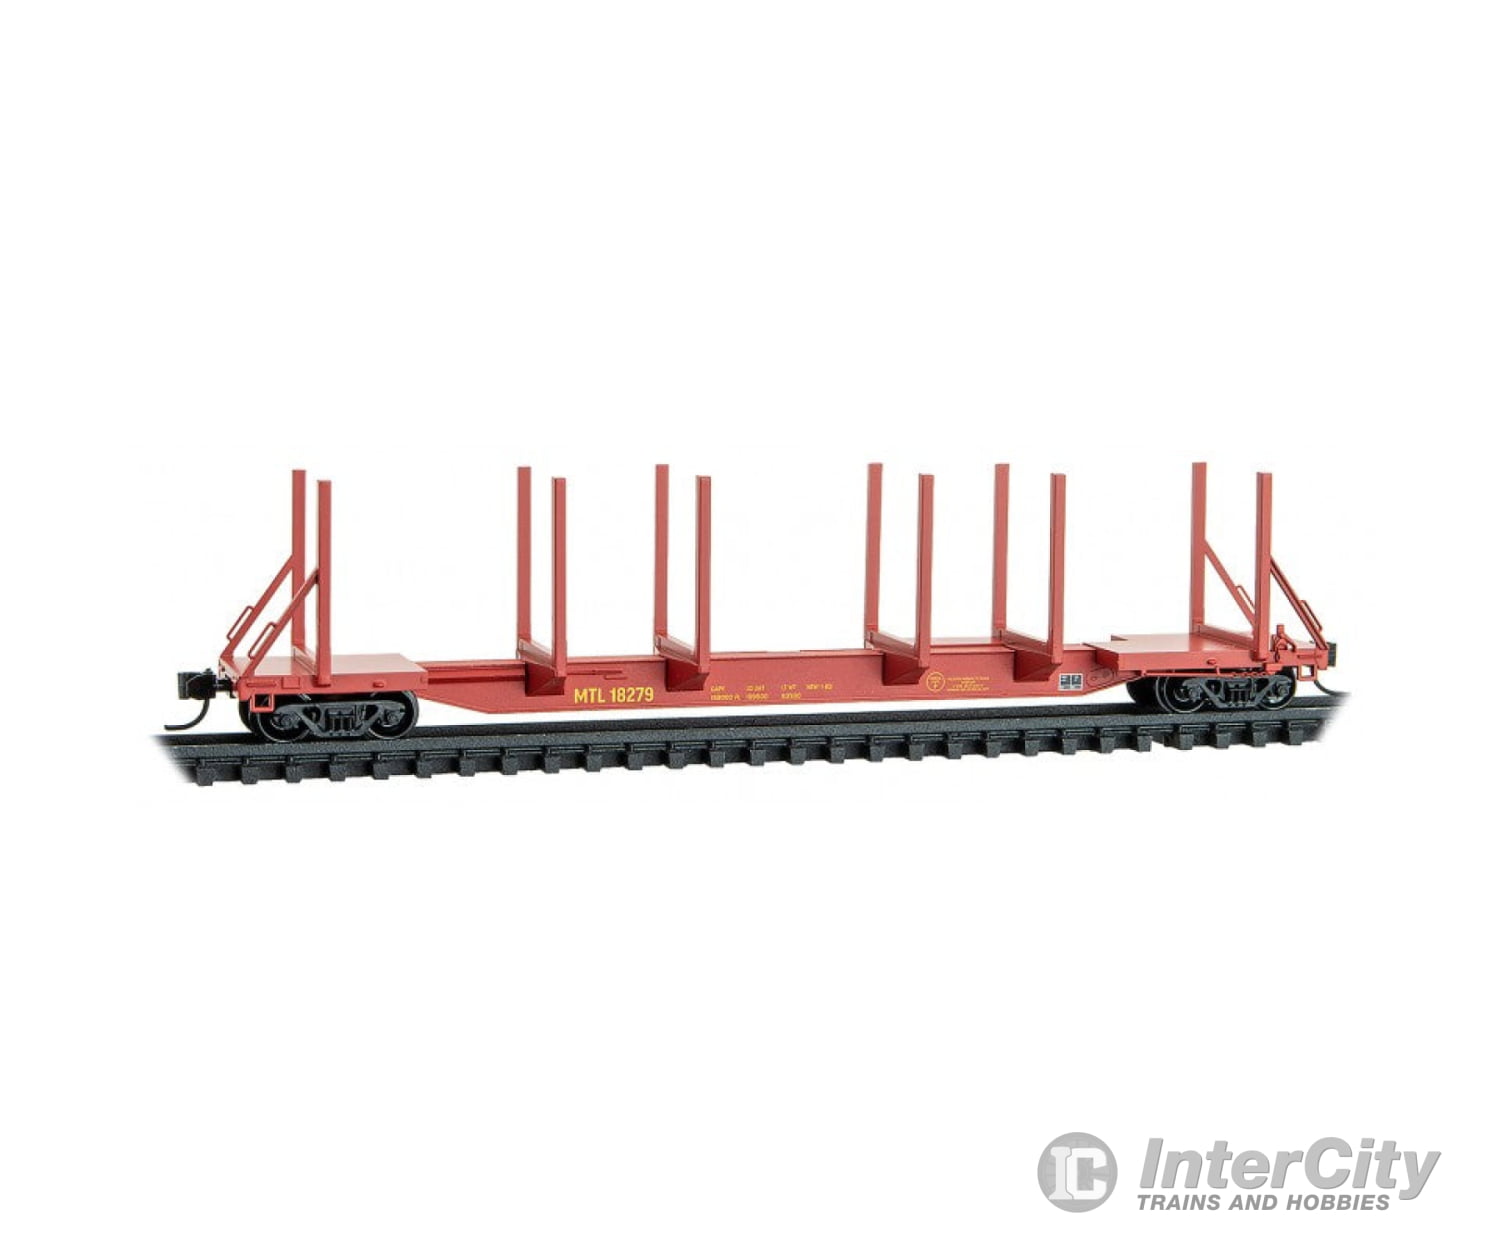 Micro Trains 11500100 N 65’ 100 - Ton Log Car Medford Talent & Lakecreek #18279 Freight Cars